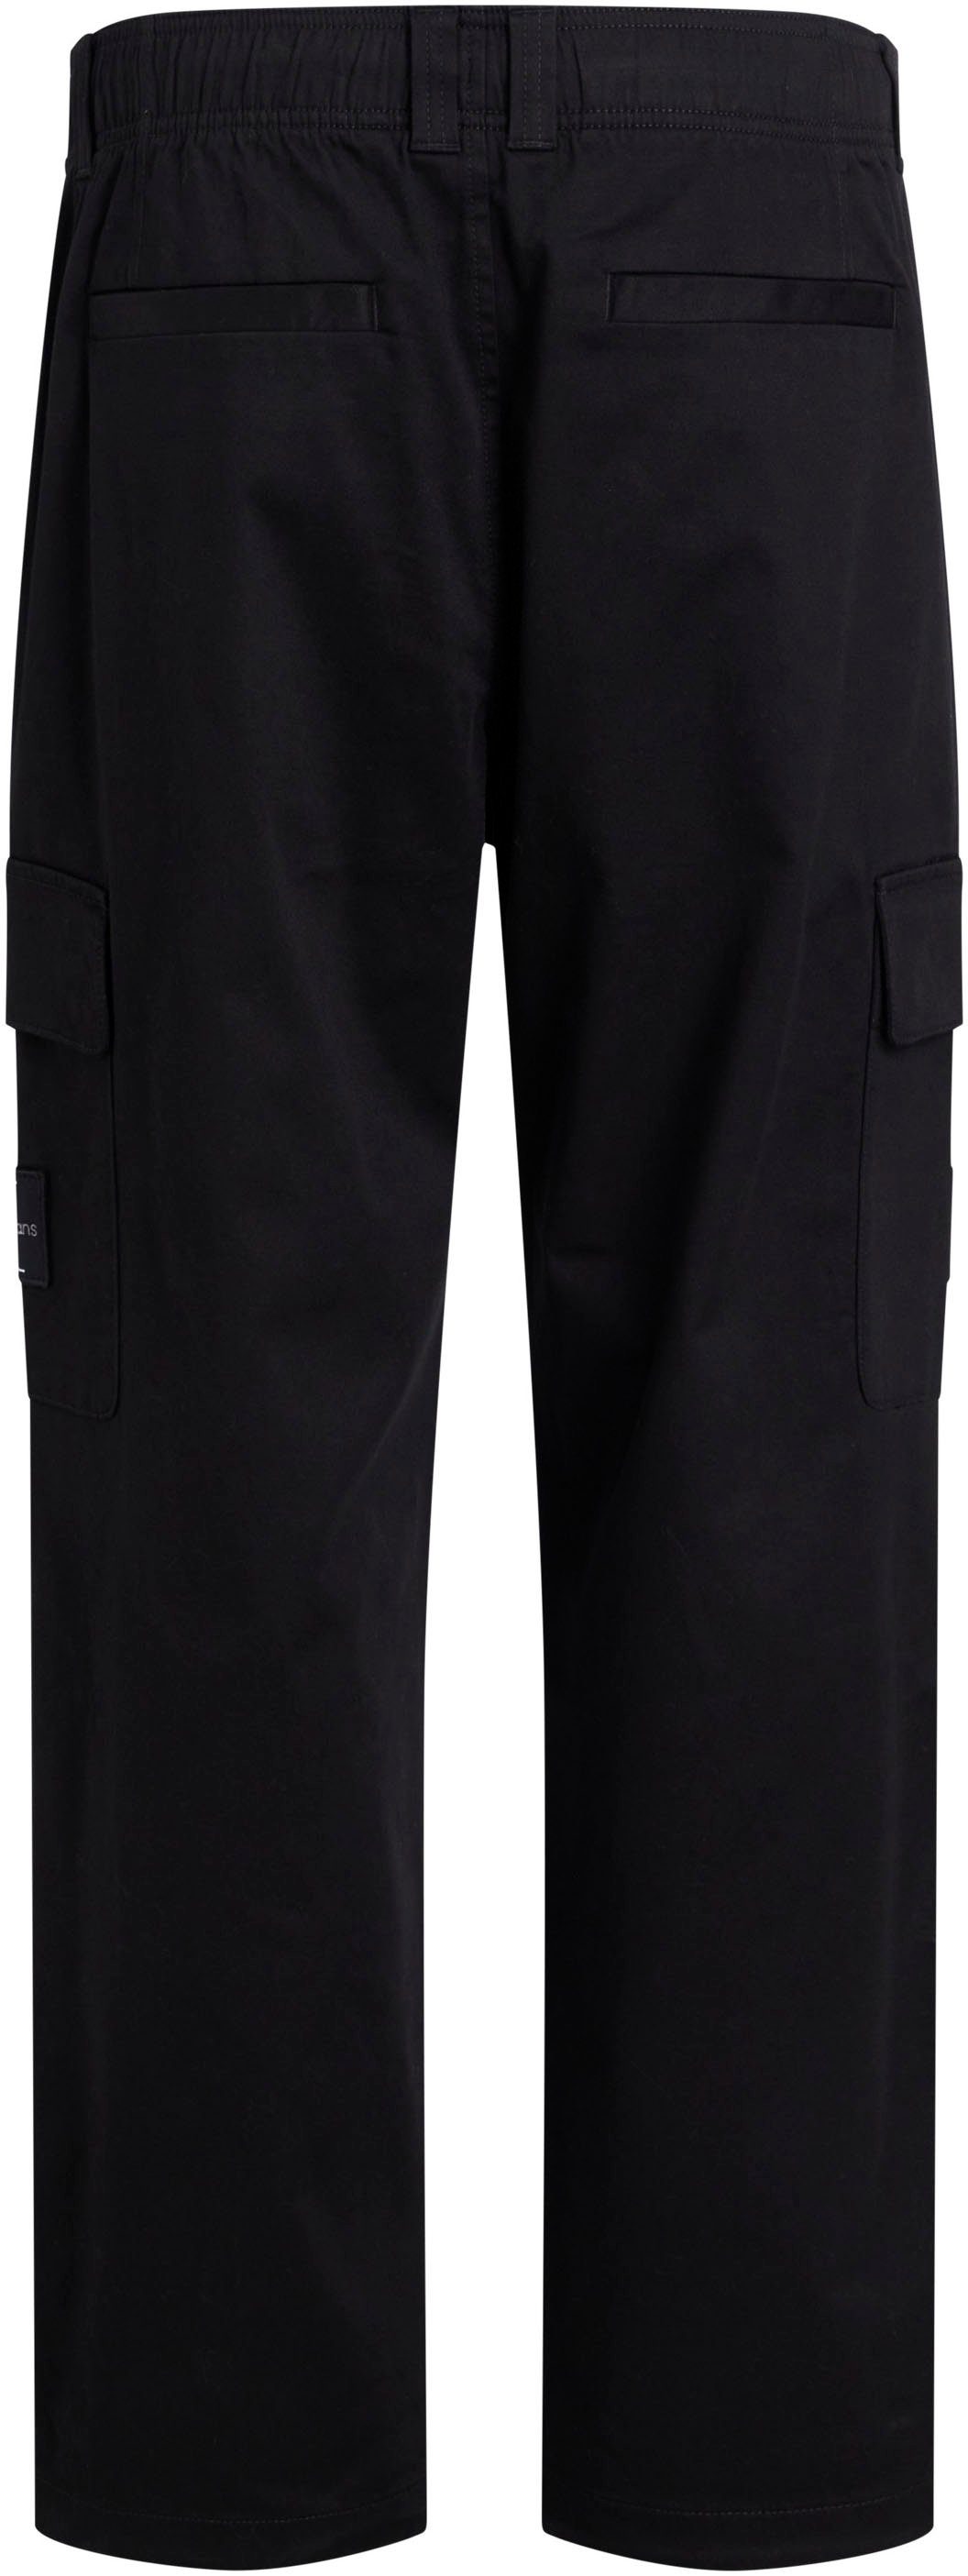 Ck ESSENTIAL Cargohose REGULAR CARGO Jeans Calvin Klein PANT Black